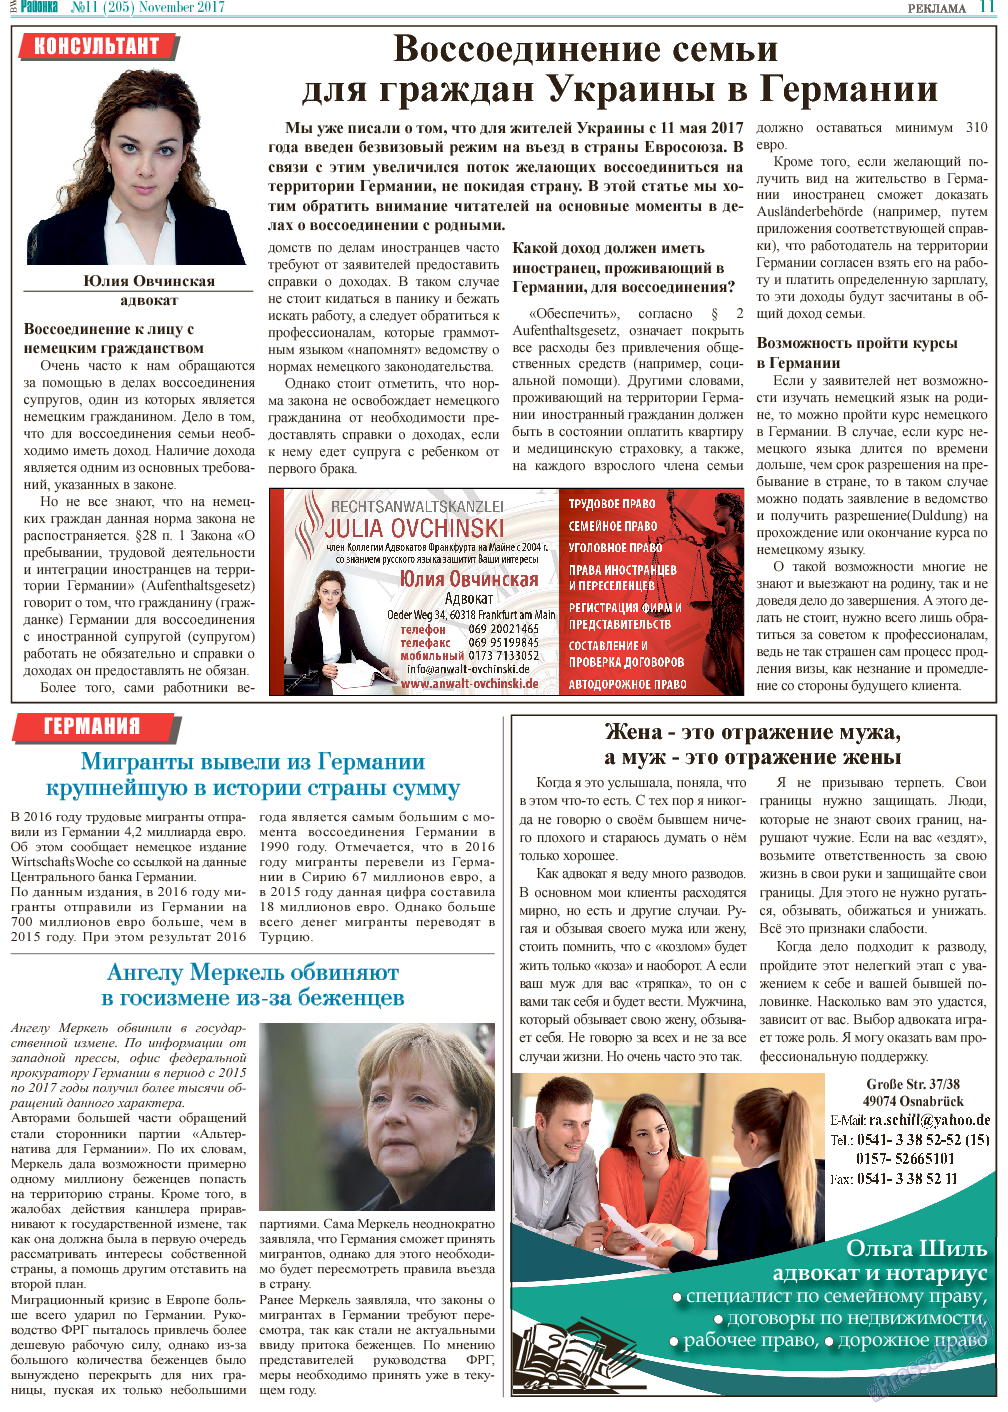 Районка-Nord-Ost-Bremen-NRW, газета. 2017 №11 стр.11